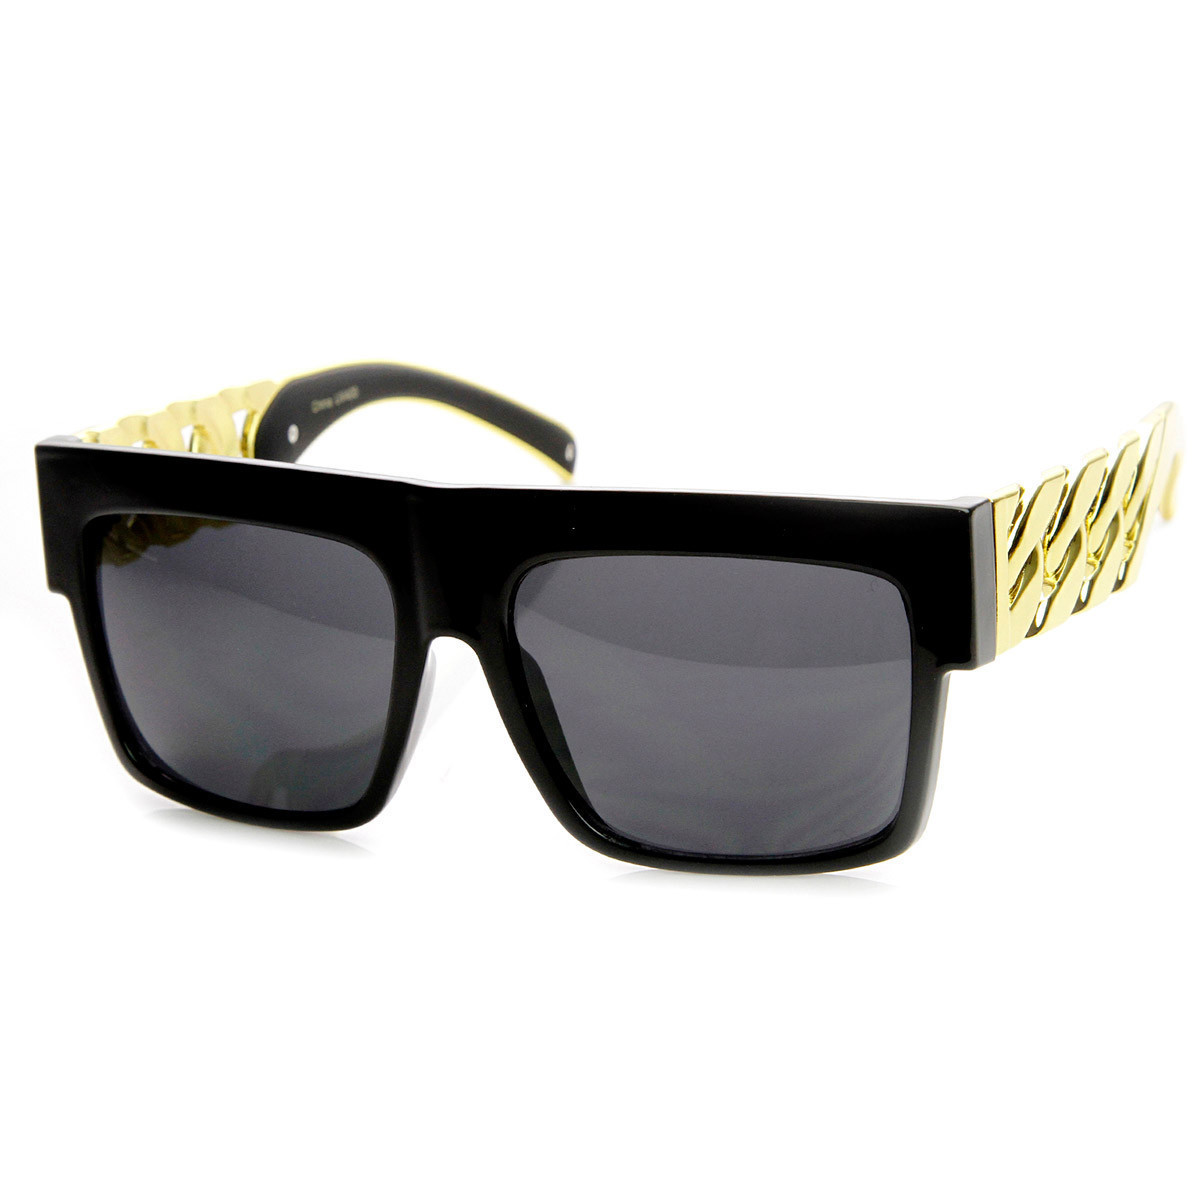 High Fashion Metal Chain Arm Flat Top Aviator Sunglasses - 9126 - Shiny Black Gold